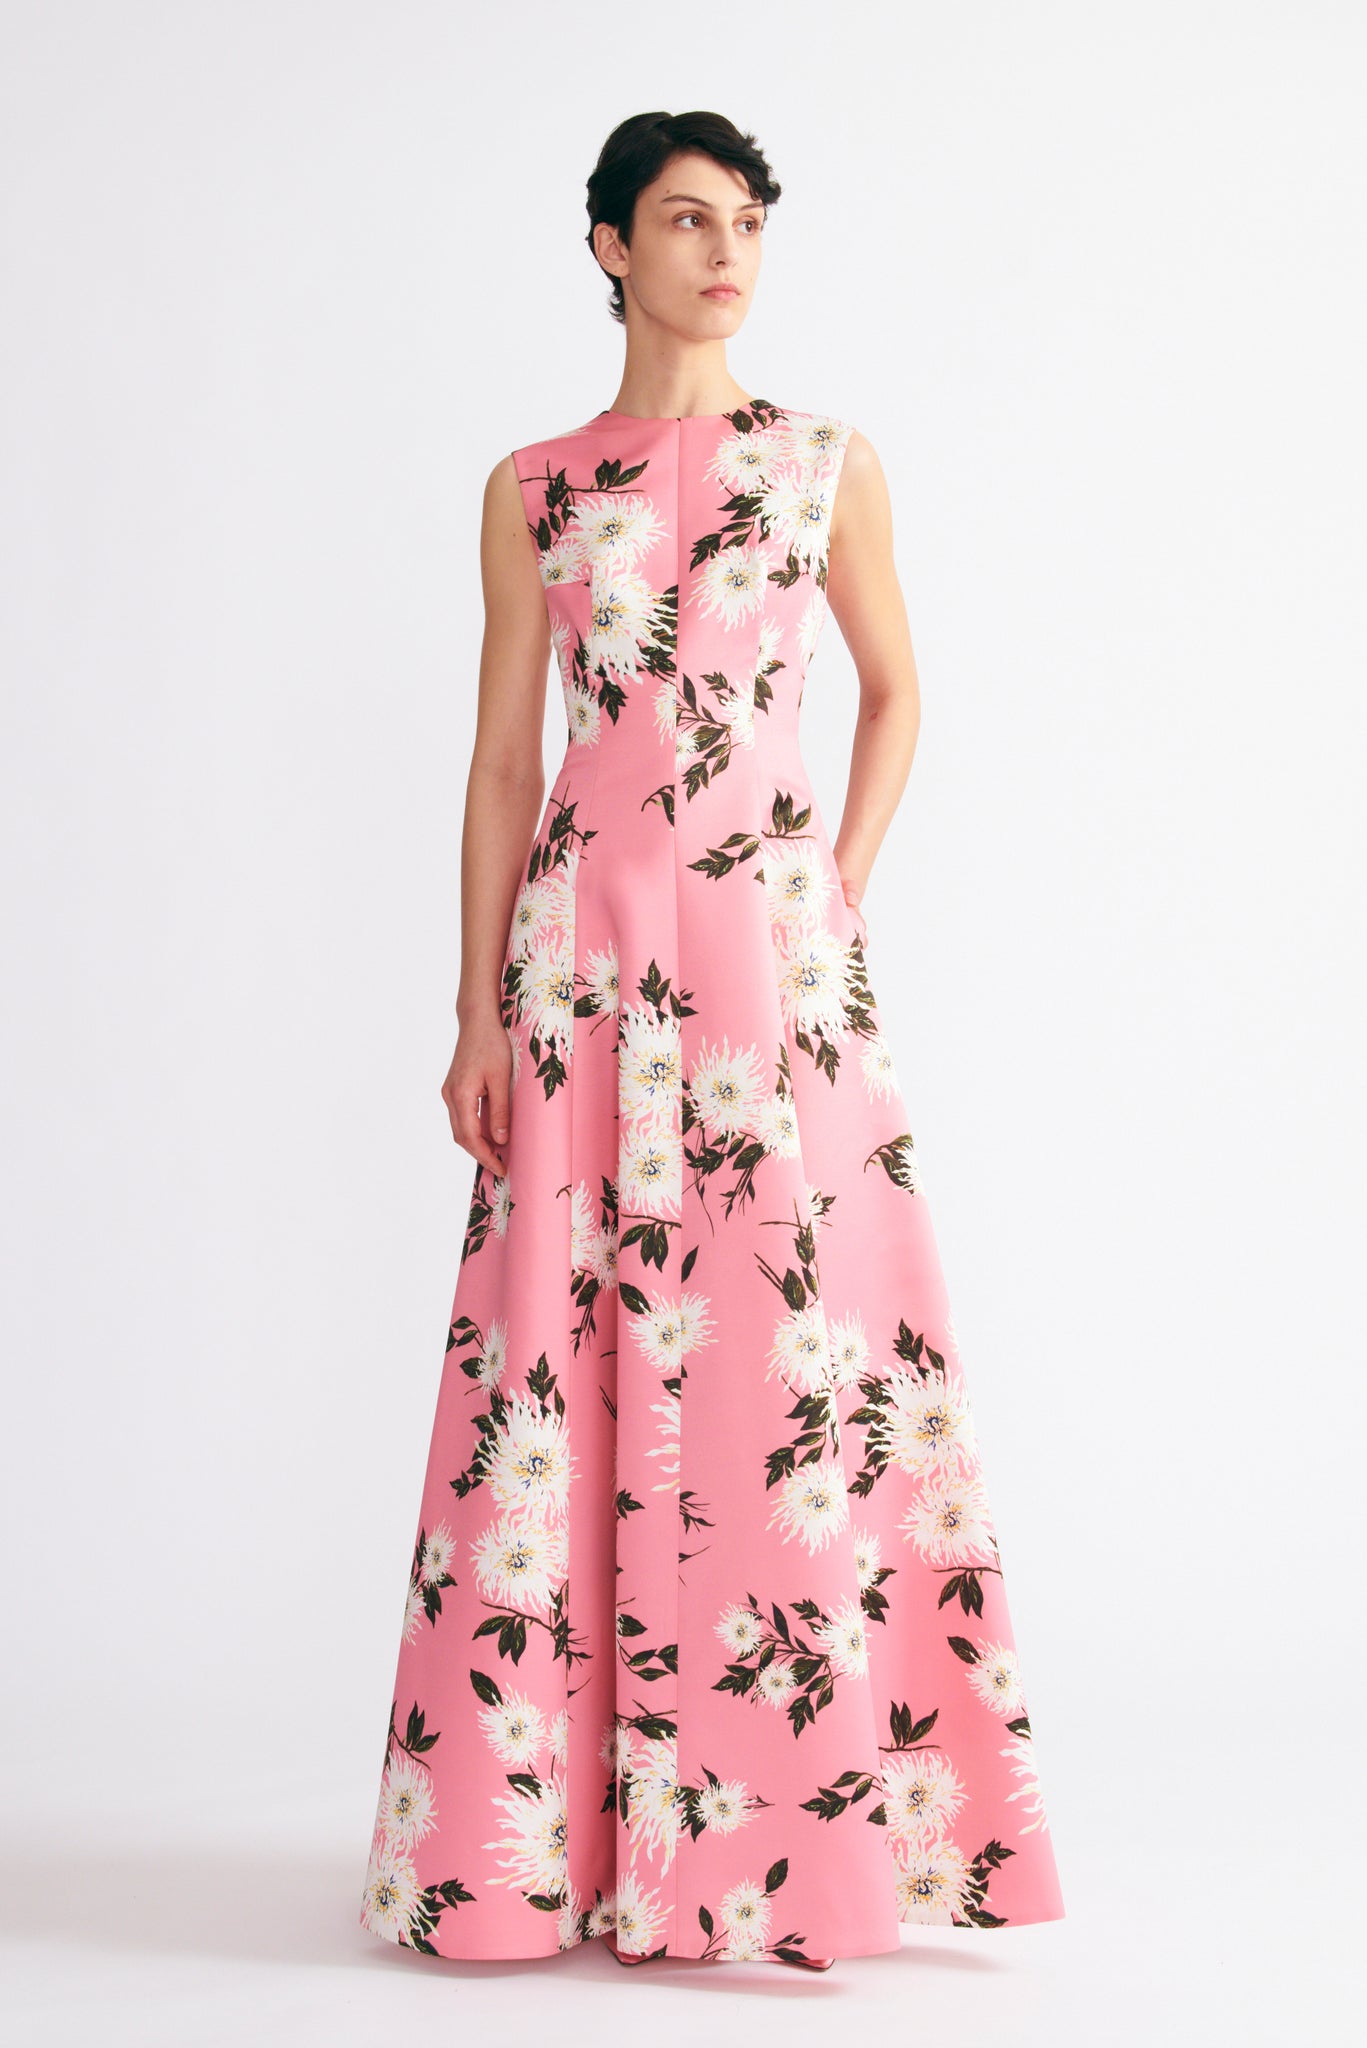 Nodin Dress In Pink Dahlia Floral Print Taffeta Faille | Emilia Wickstead